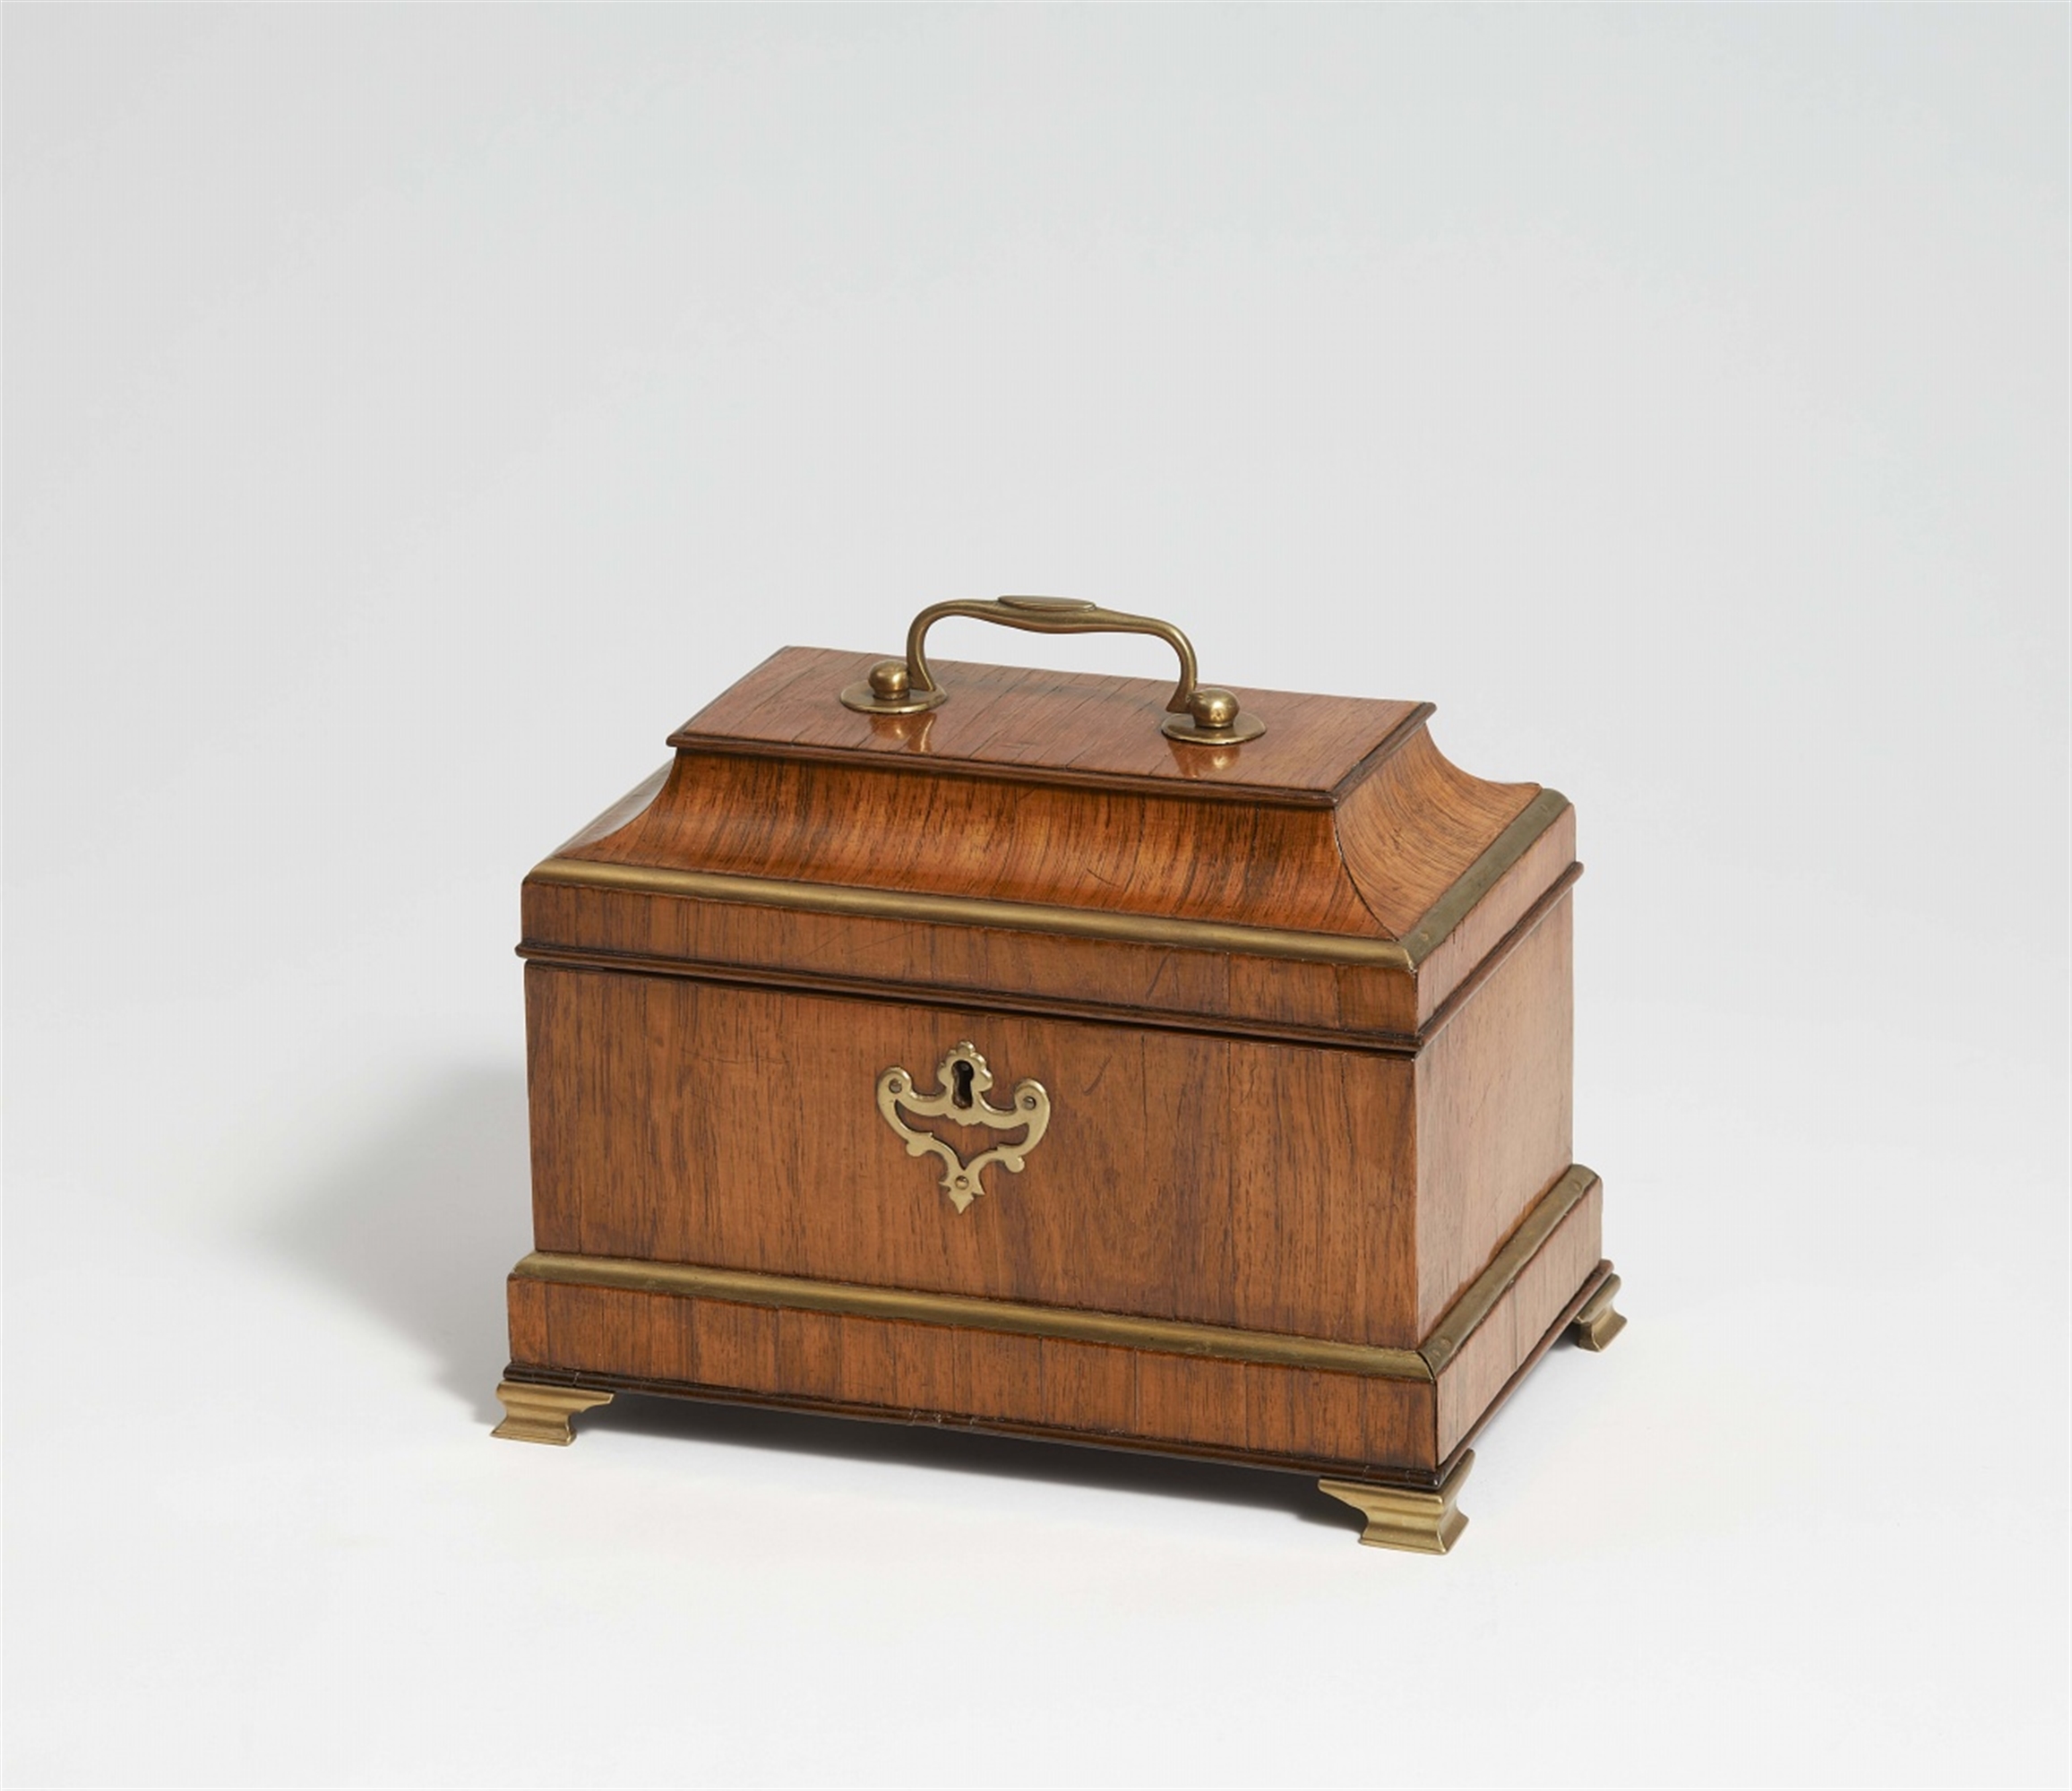 A rosewood tea caddy by Abraham Roentgen